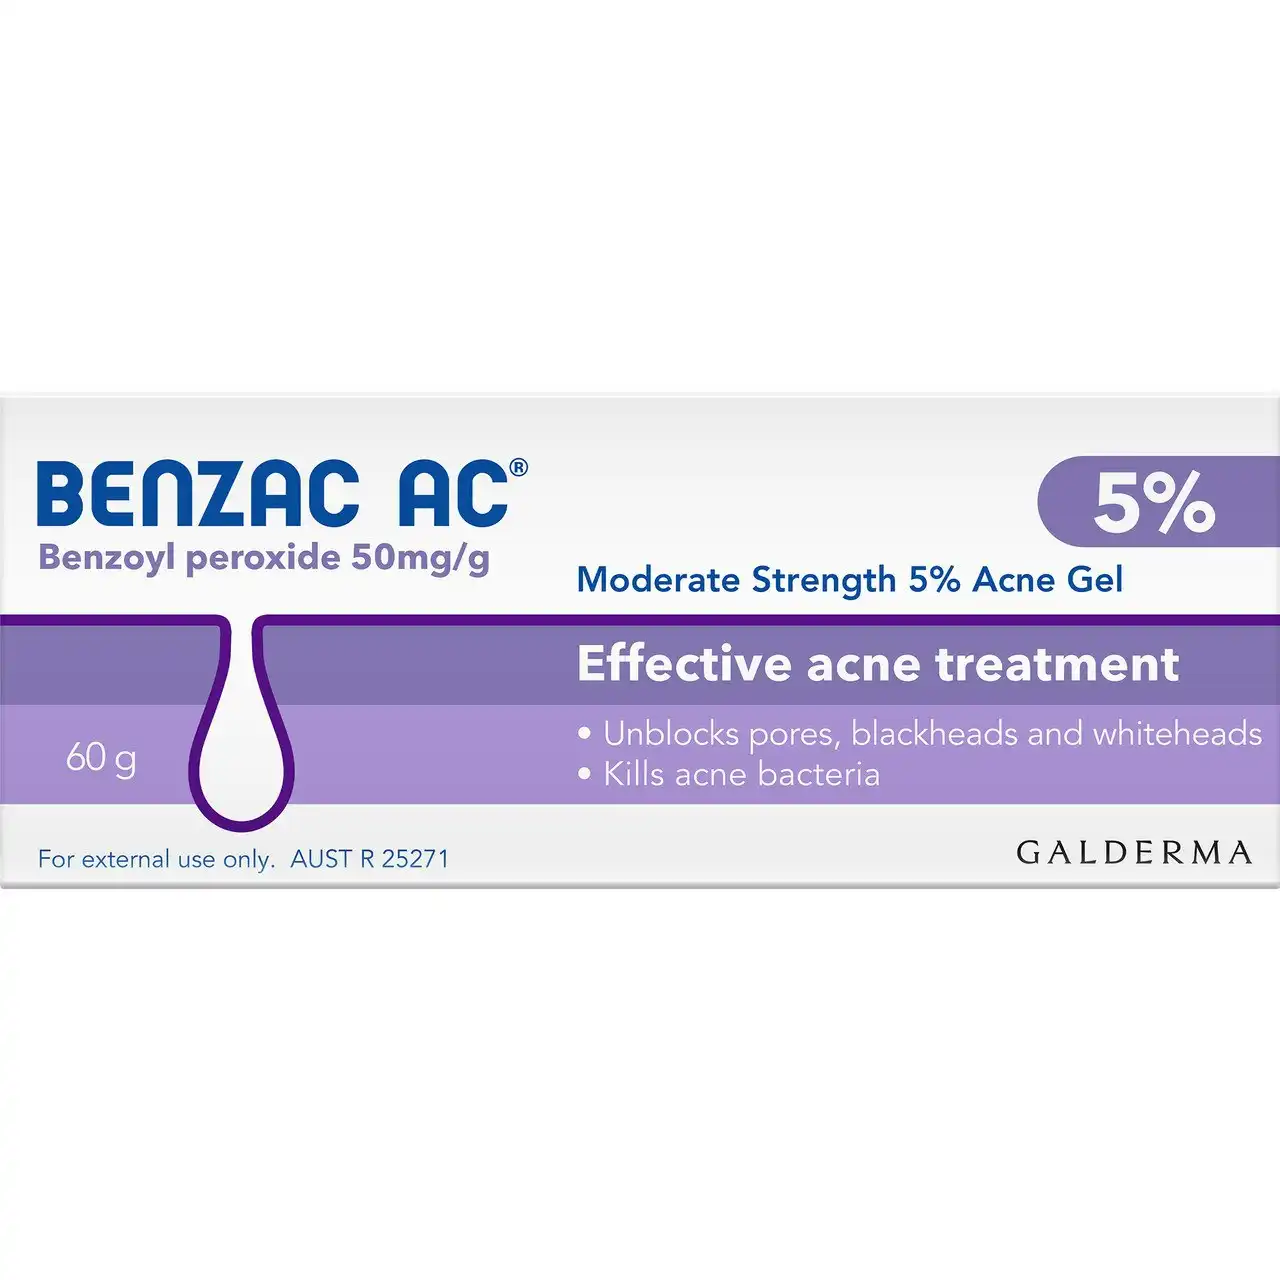 Benzac AC Moderate Strength 5% Acne Gel 60g, Acne Treatment